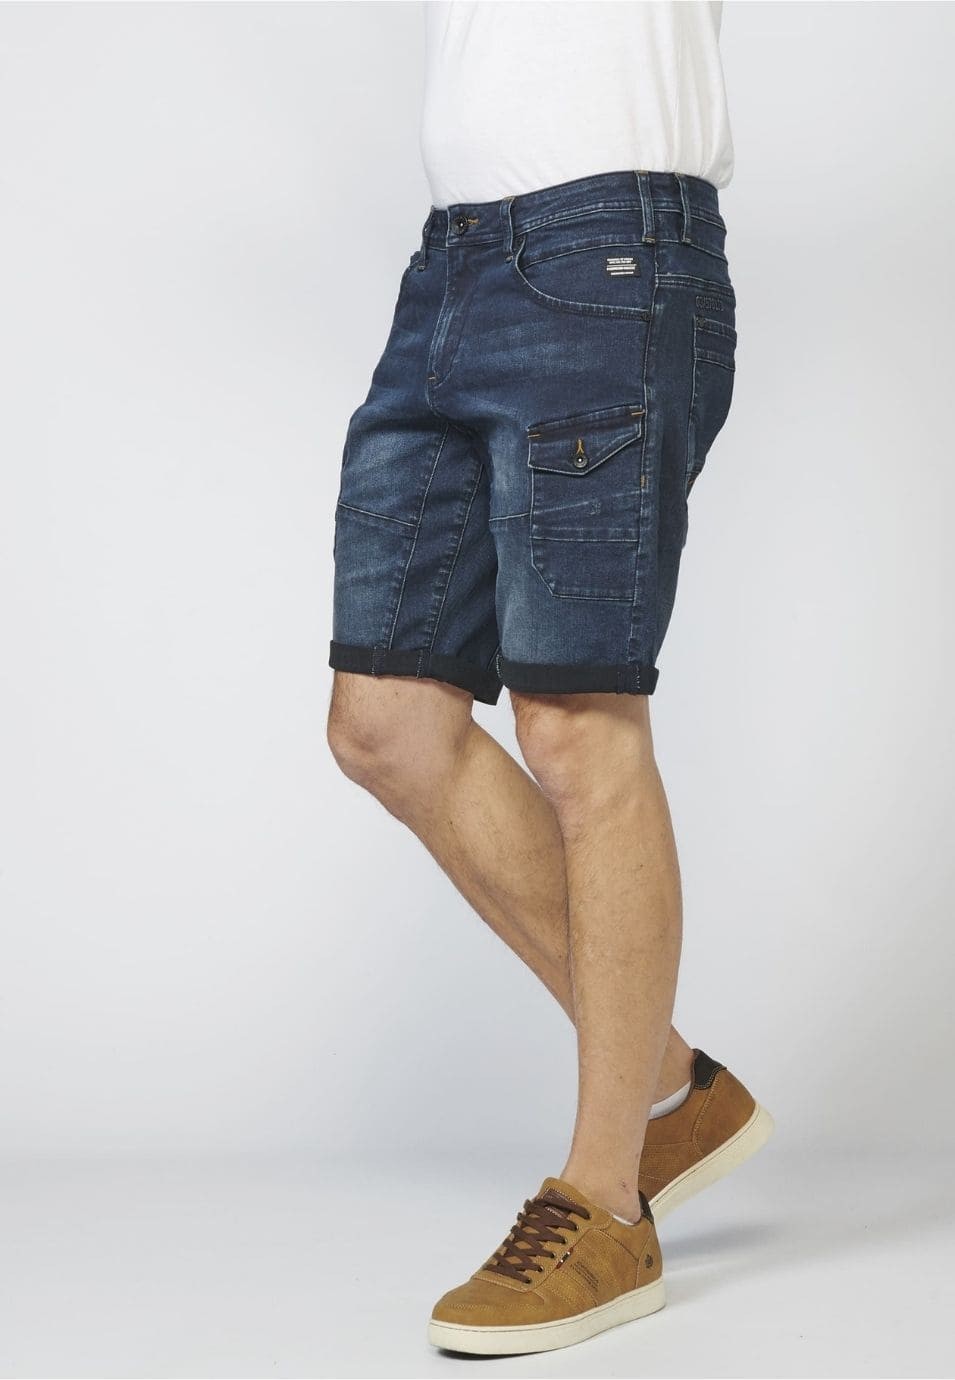 Pantalon corto denim cortes regular fit 5